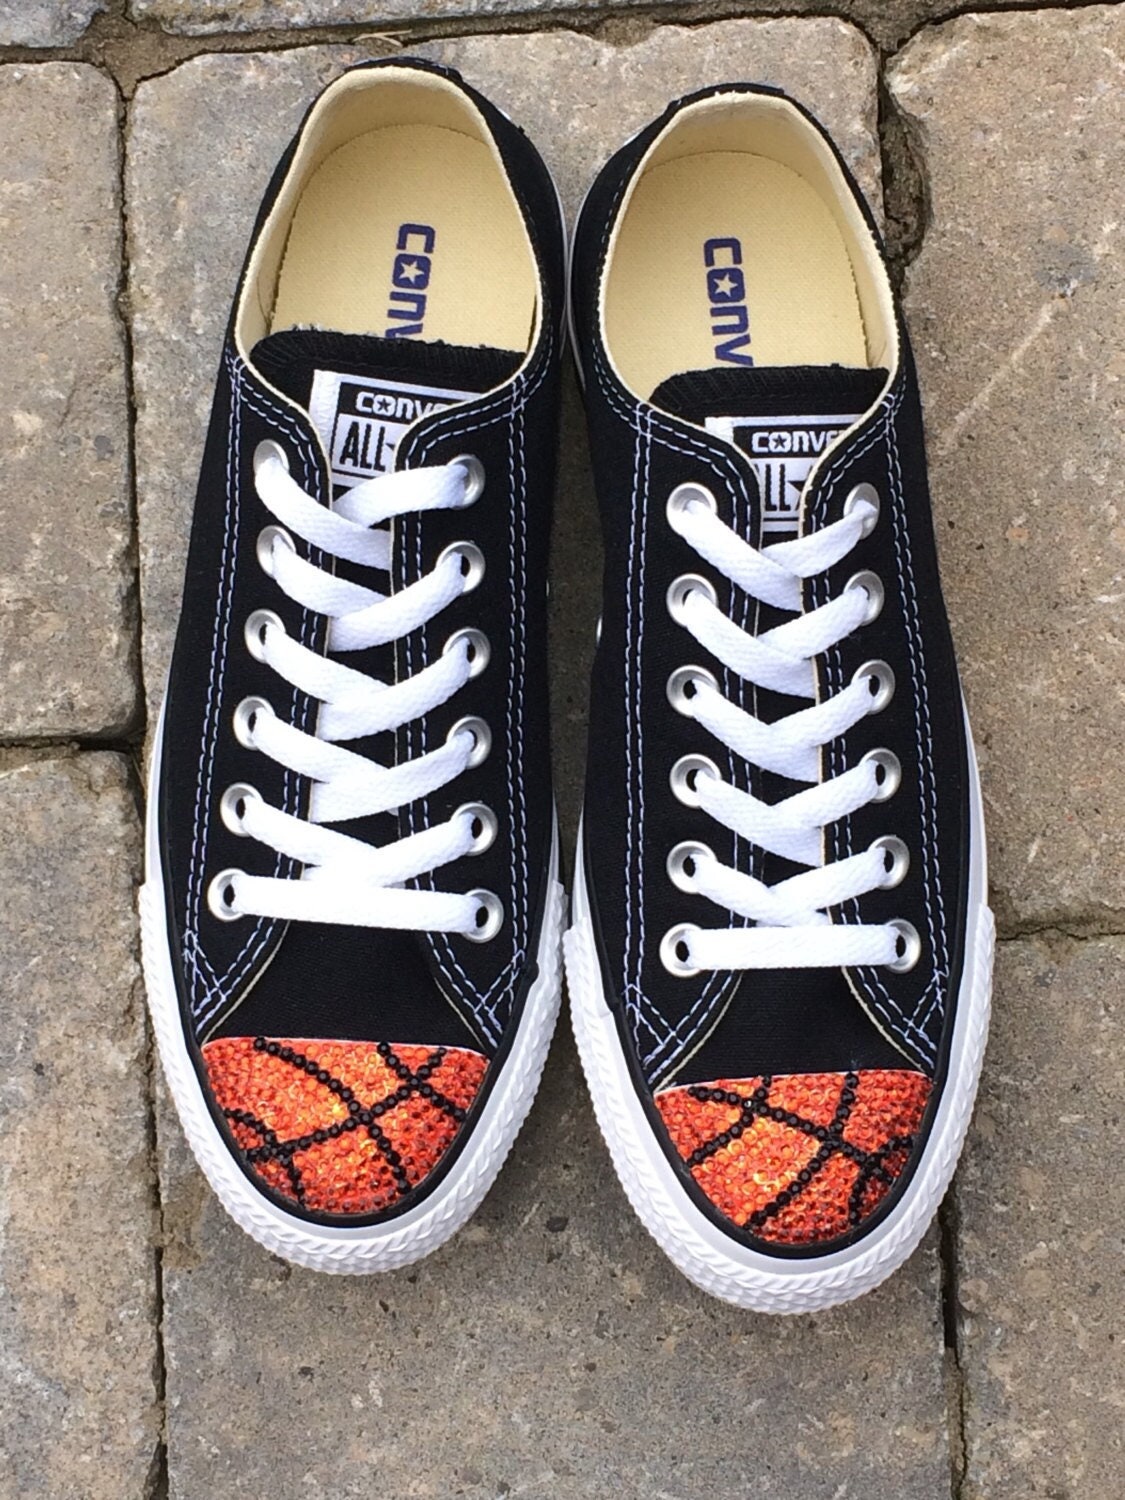 Bling Basketball Shoes. Basketball Converse Shoes. Women's - Etsy